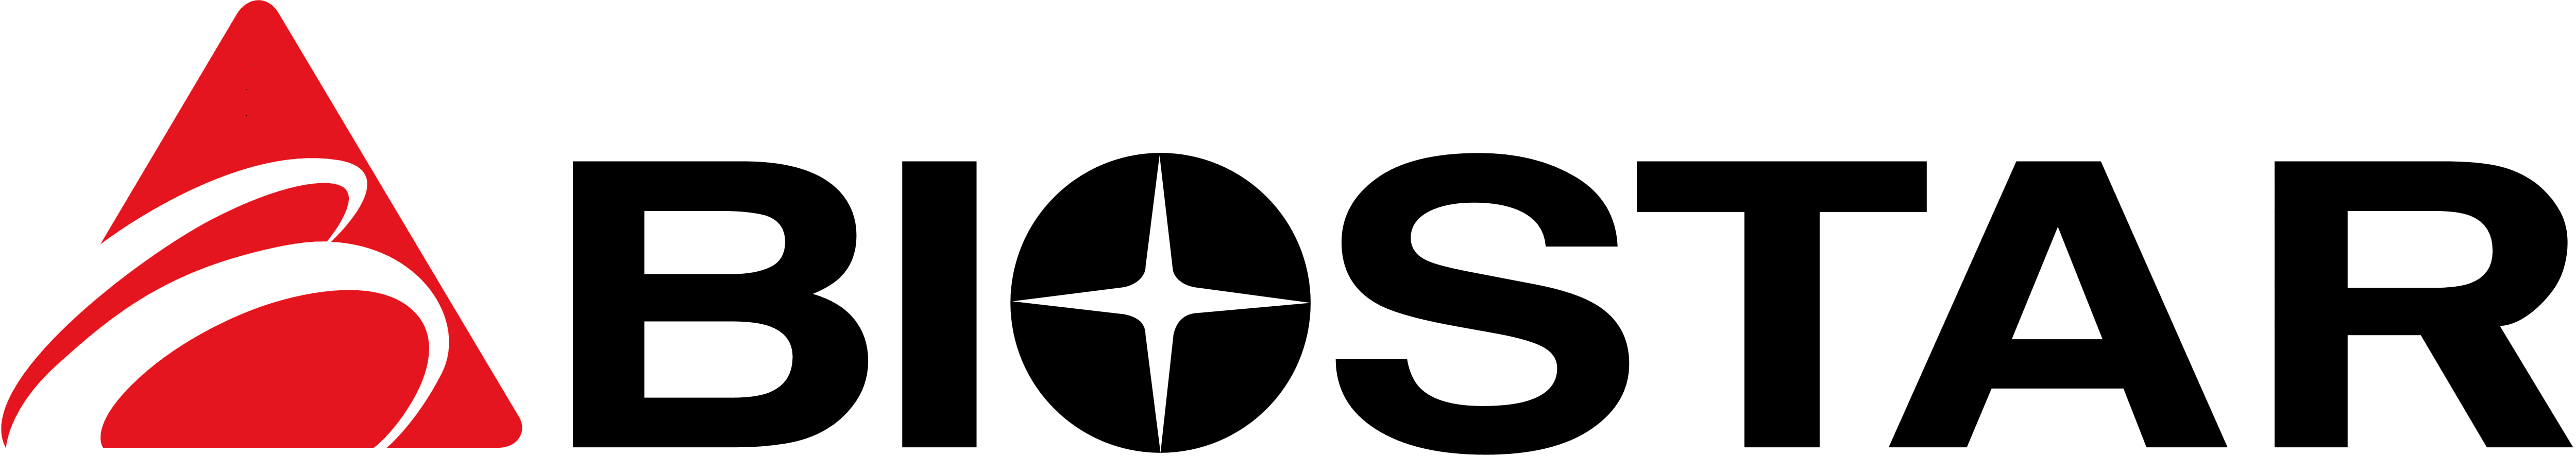 Biostar Logo - Biostar – Logos Download